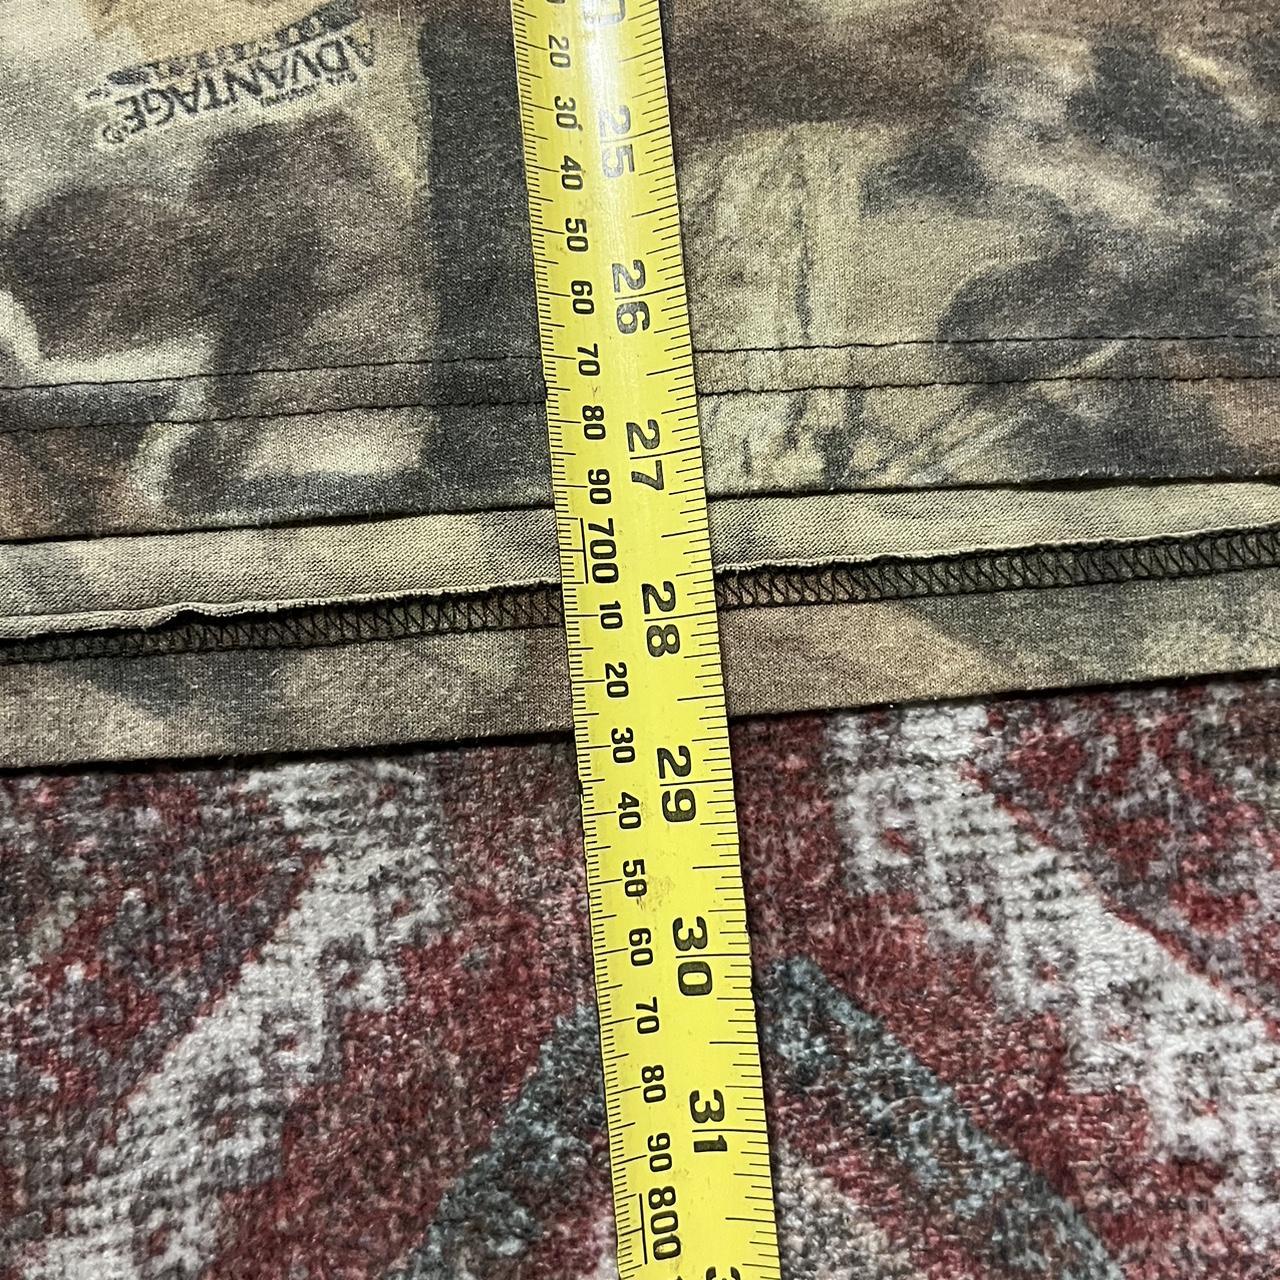 Vintage Colorado Avalanche Reebok Long Sleeve Size - Depop